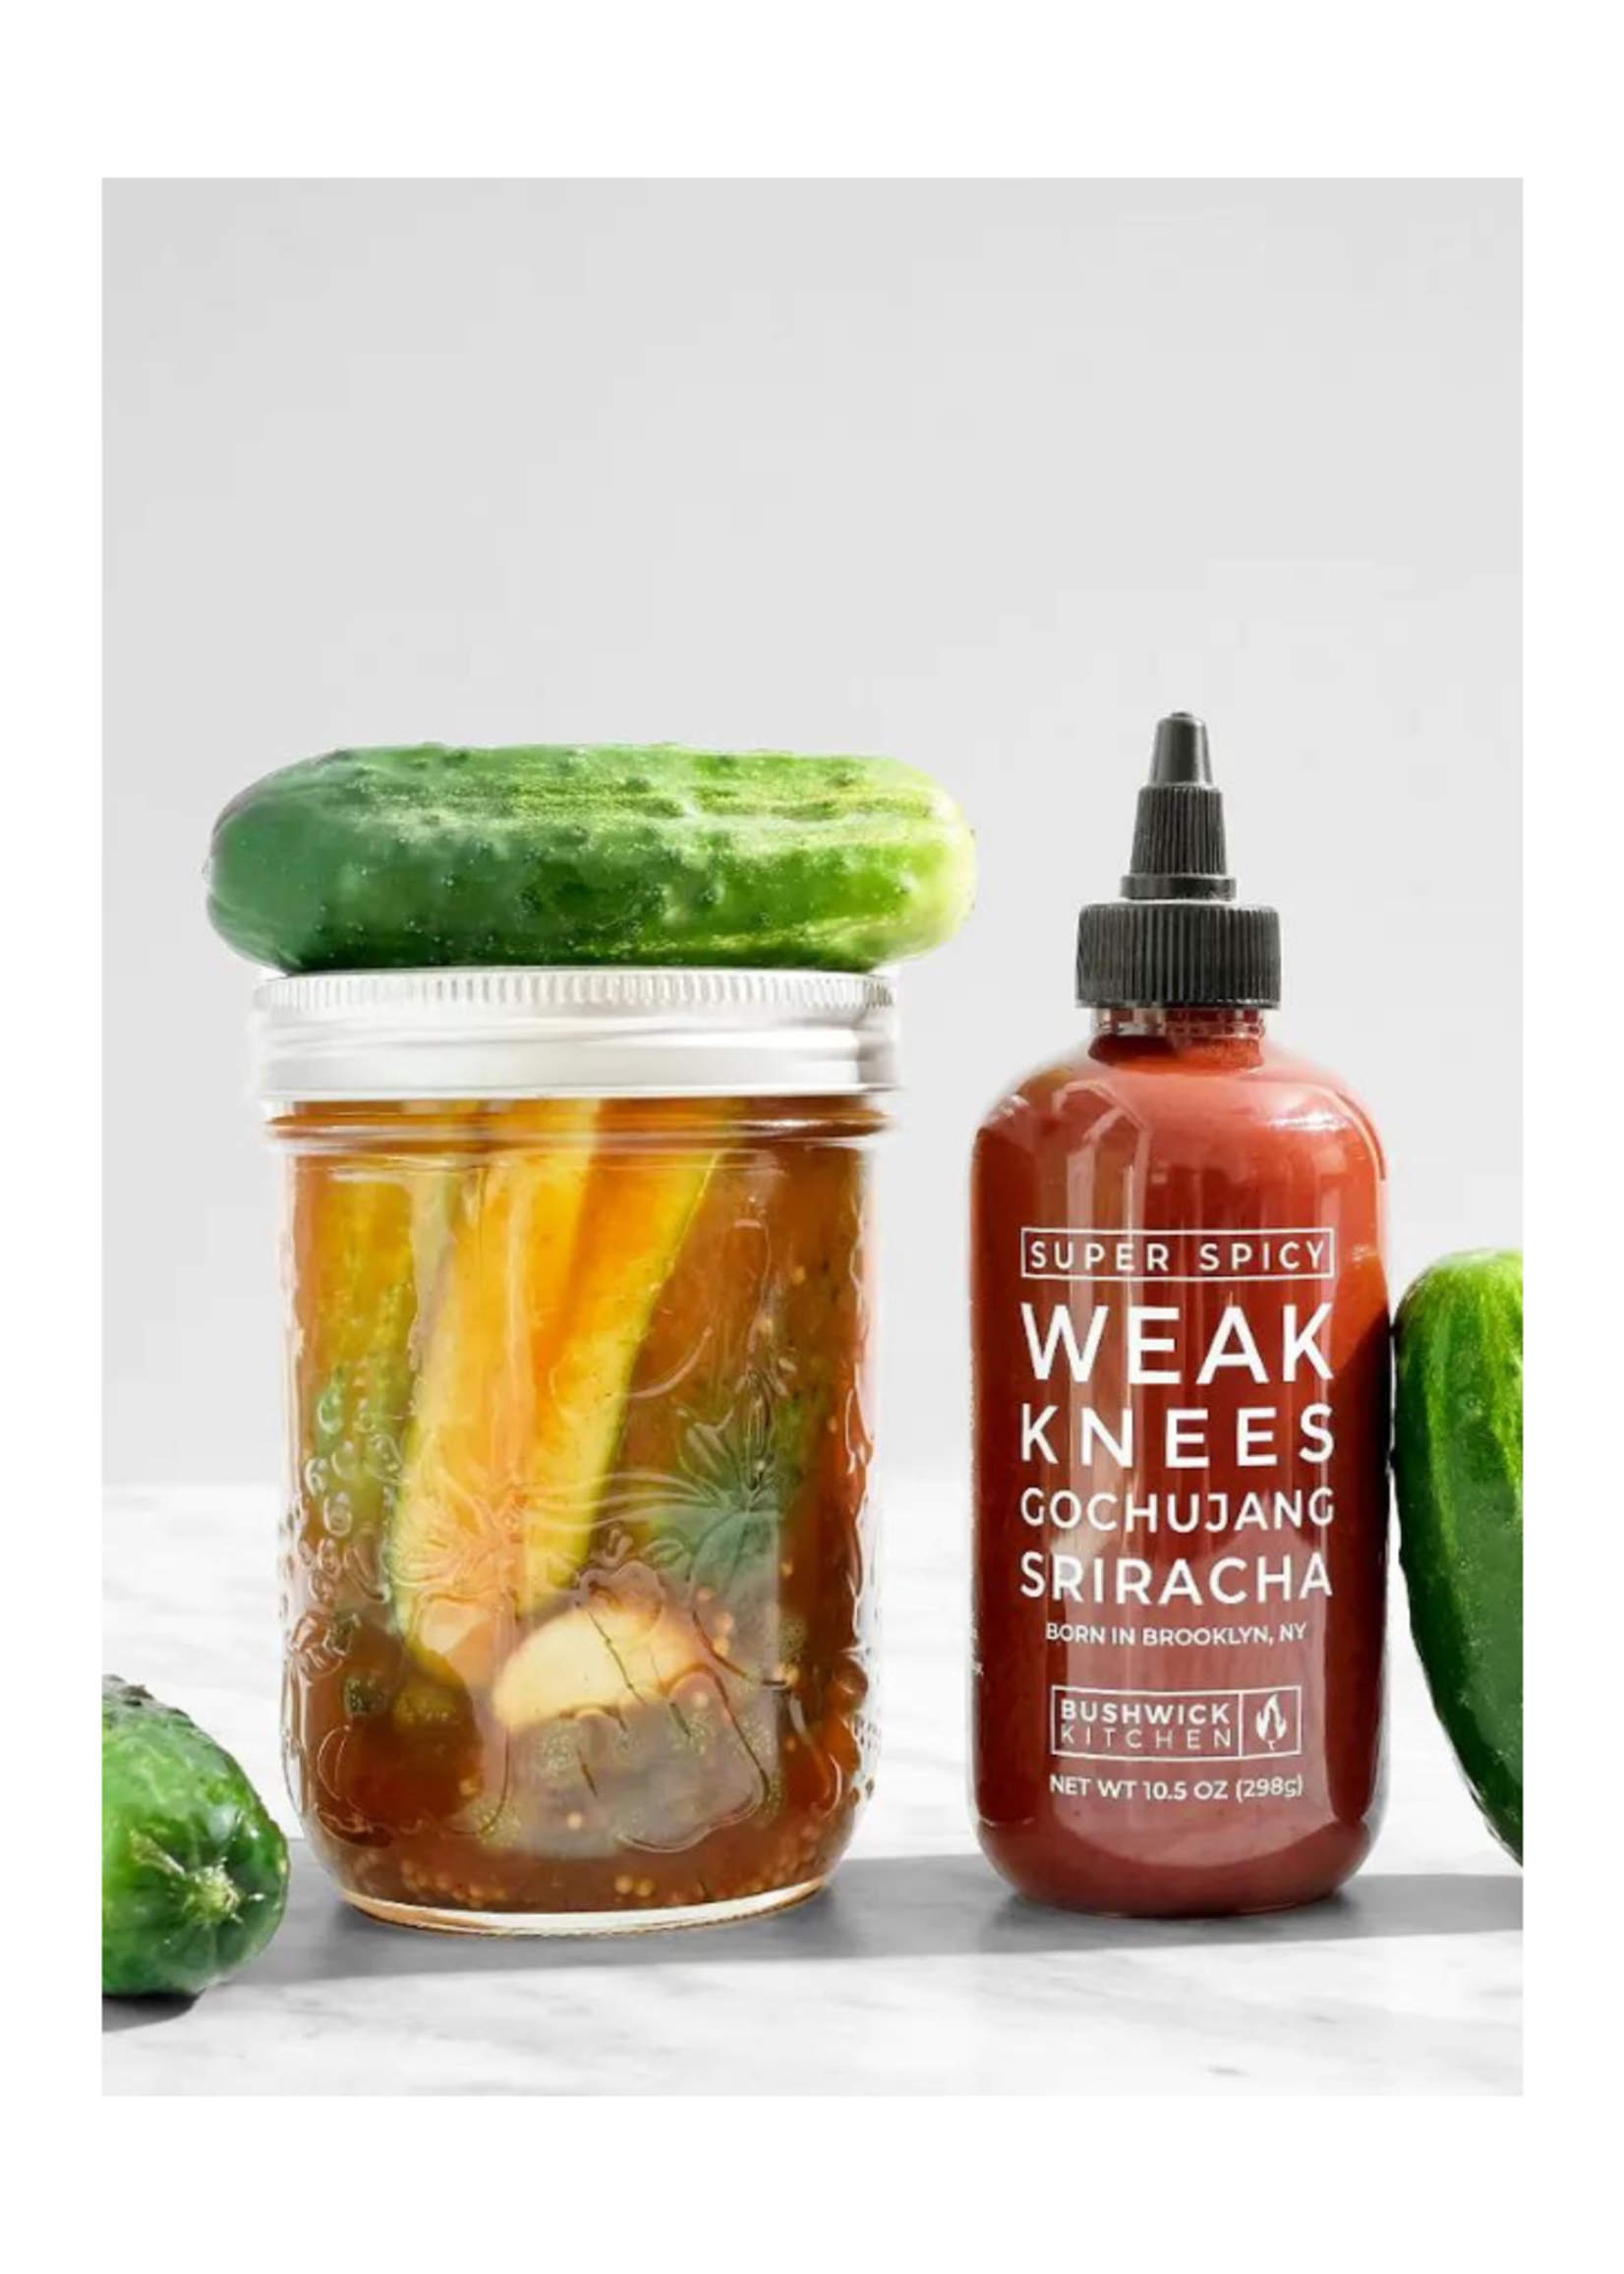 Bushwick Kitchen Bushwick Kitchen - Super Spicy Weak Knees Gochujang Sriracha